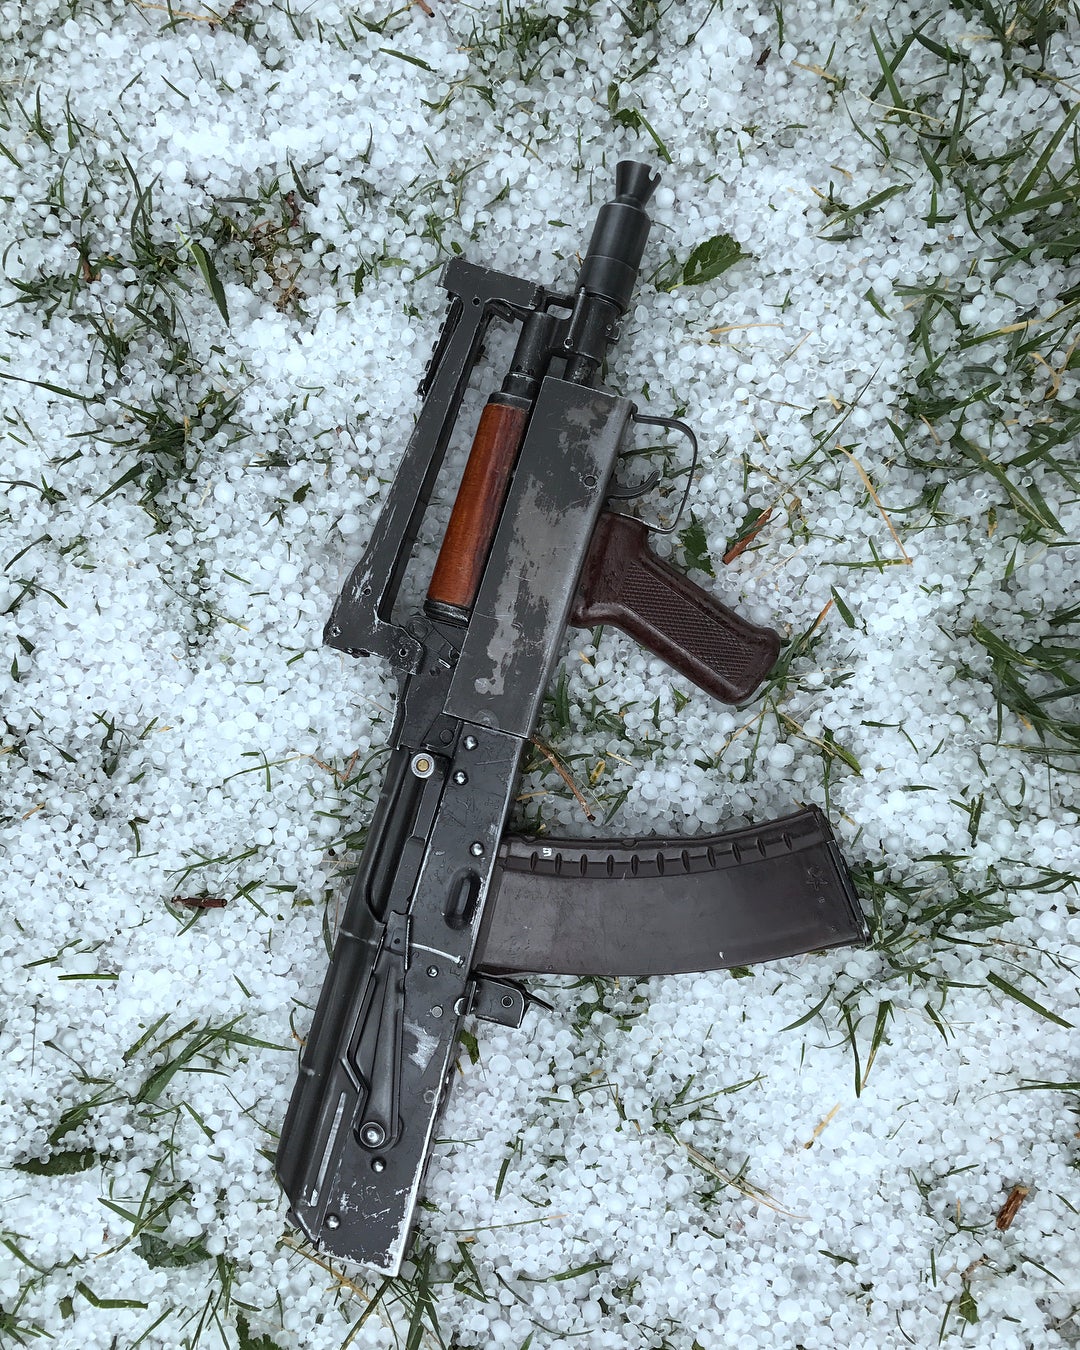 Groza Pistol in the snow